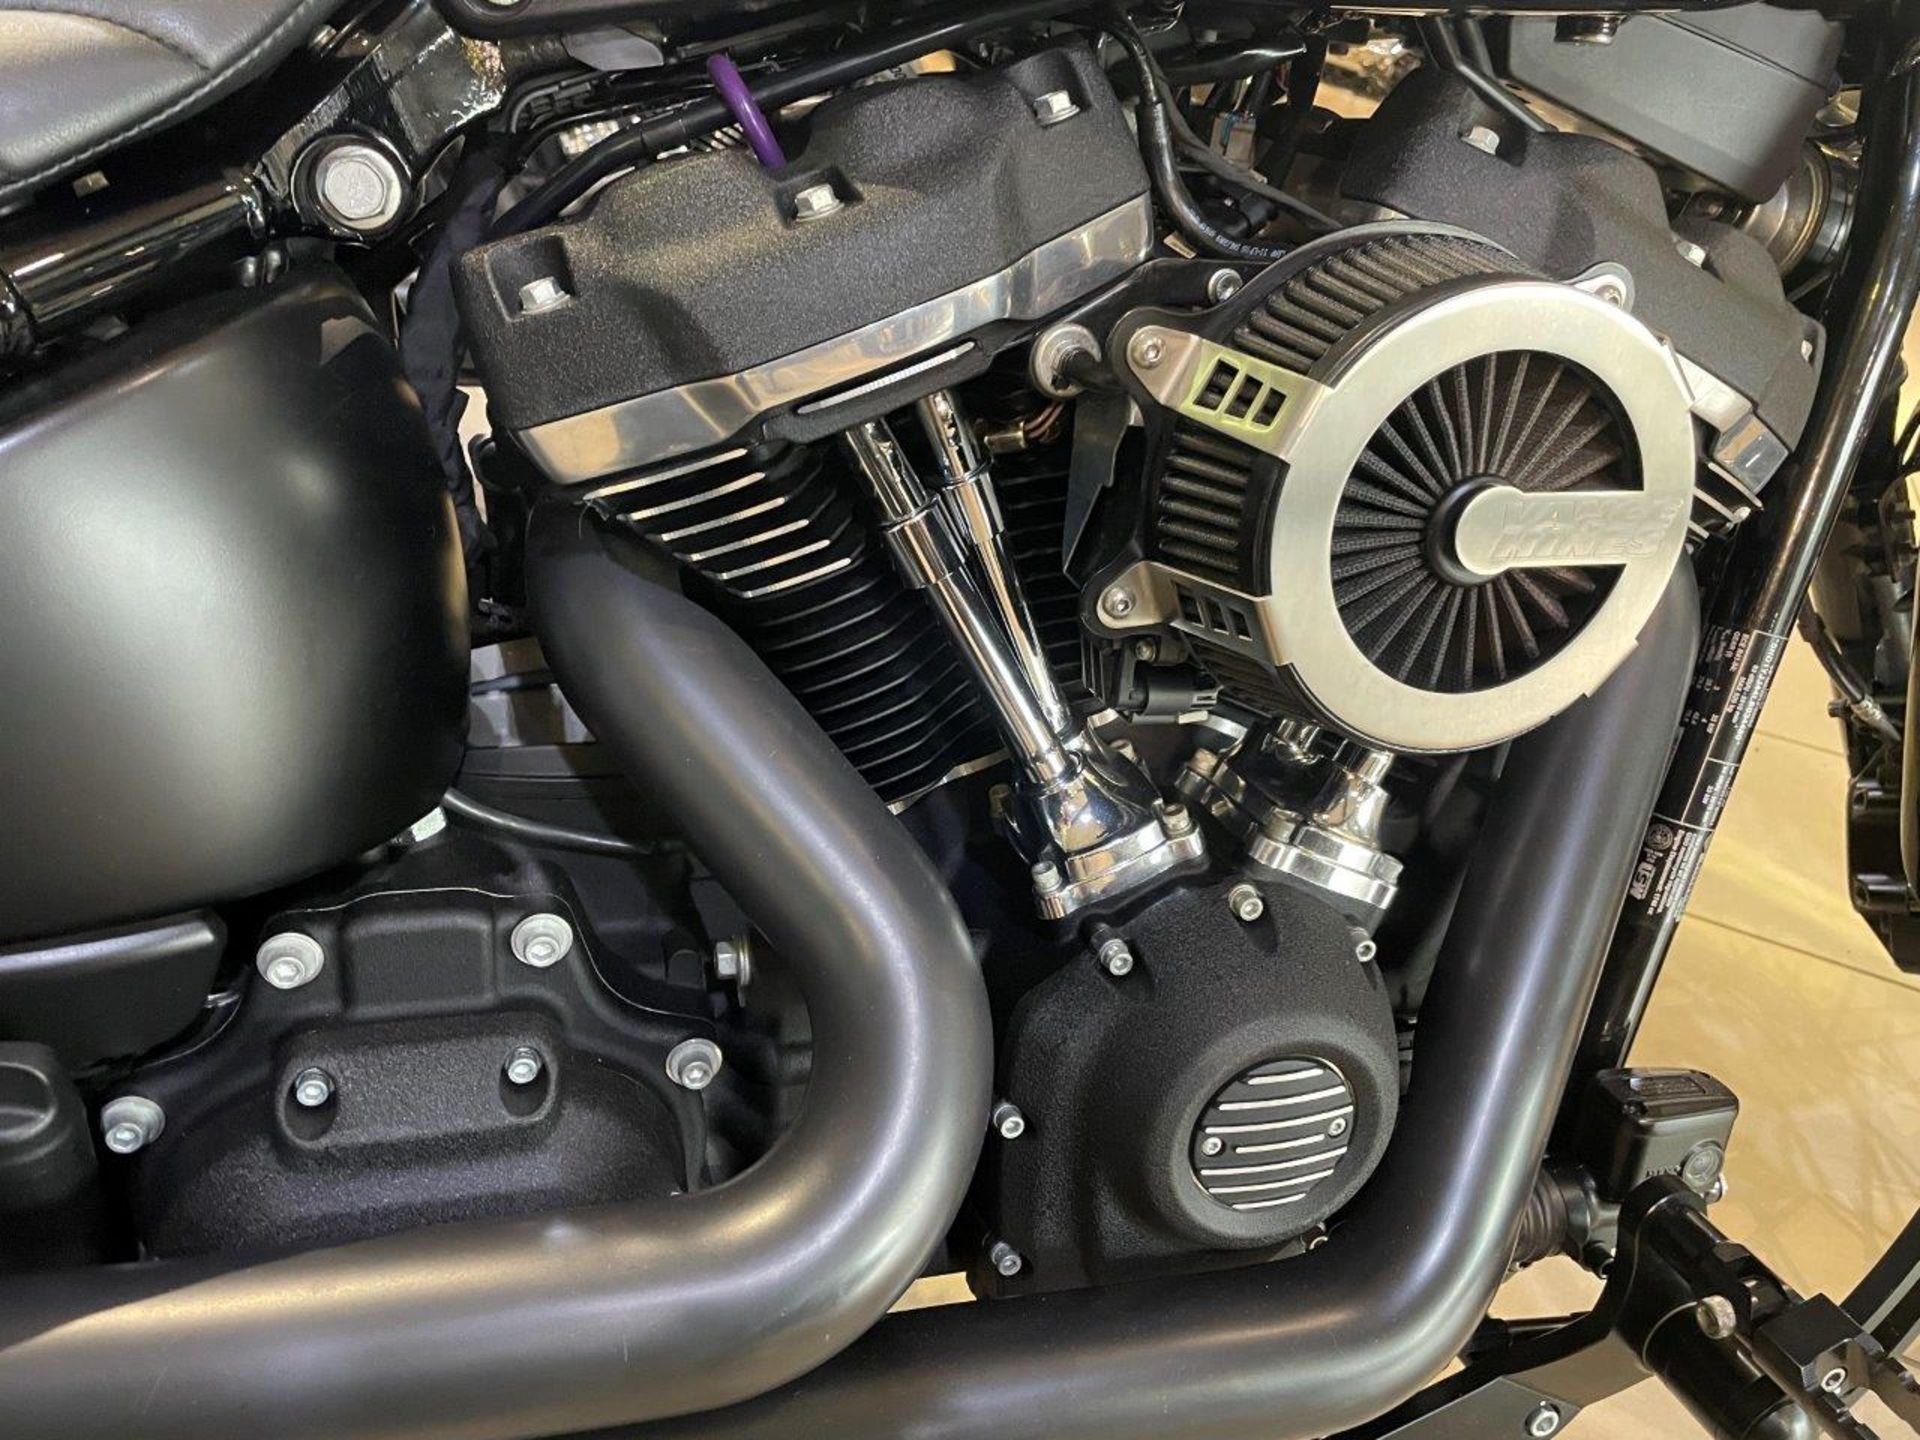 Harley Davidson FXBB Street Bob 1745cc Motorbike (June 2020) - Image 4 of 18